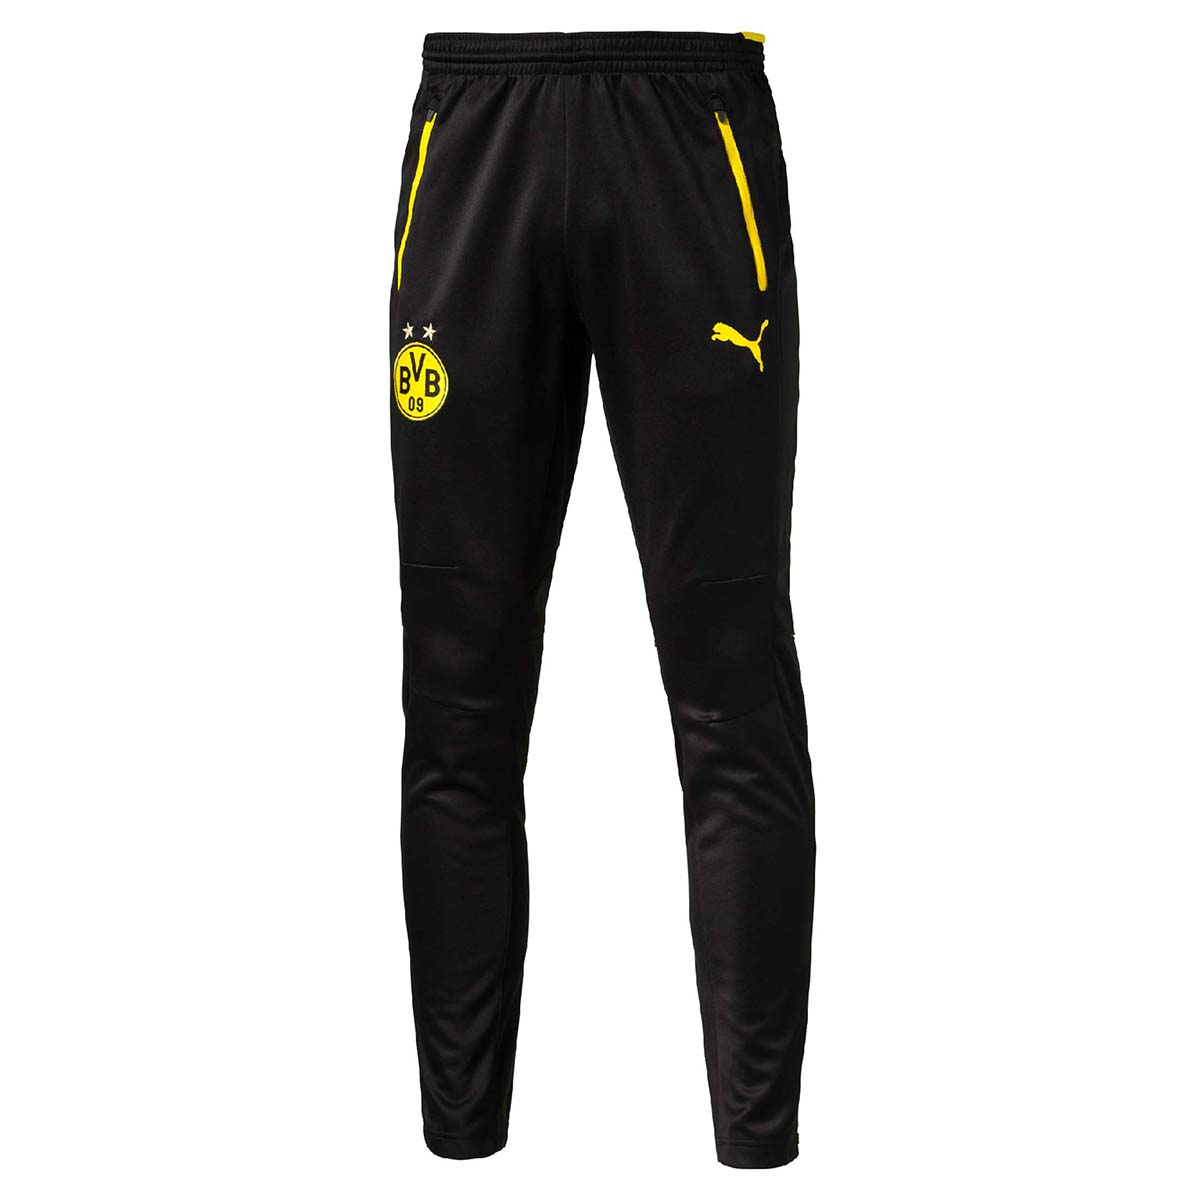 PUMA Borussia Dortmund BVB Trainingshose Pants 749863 02